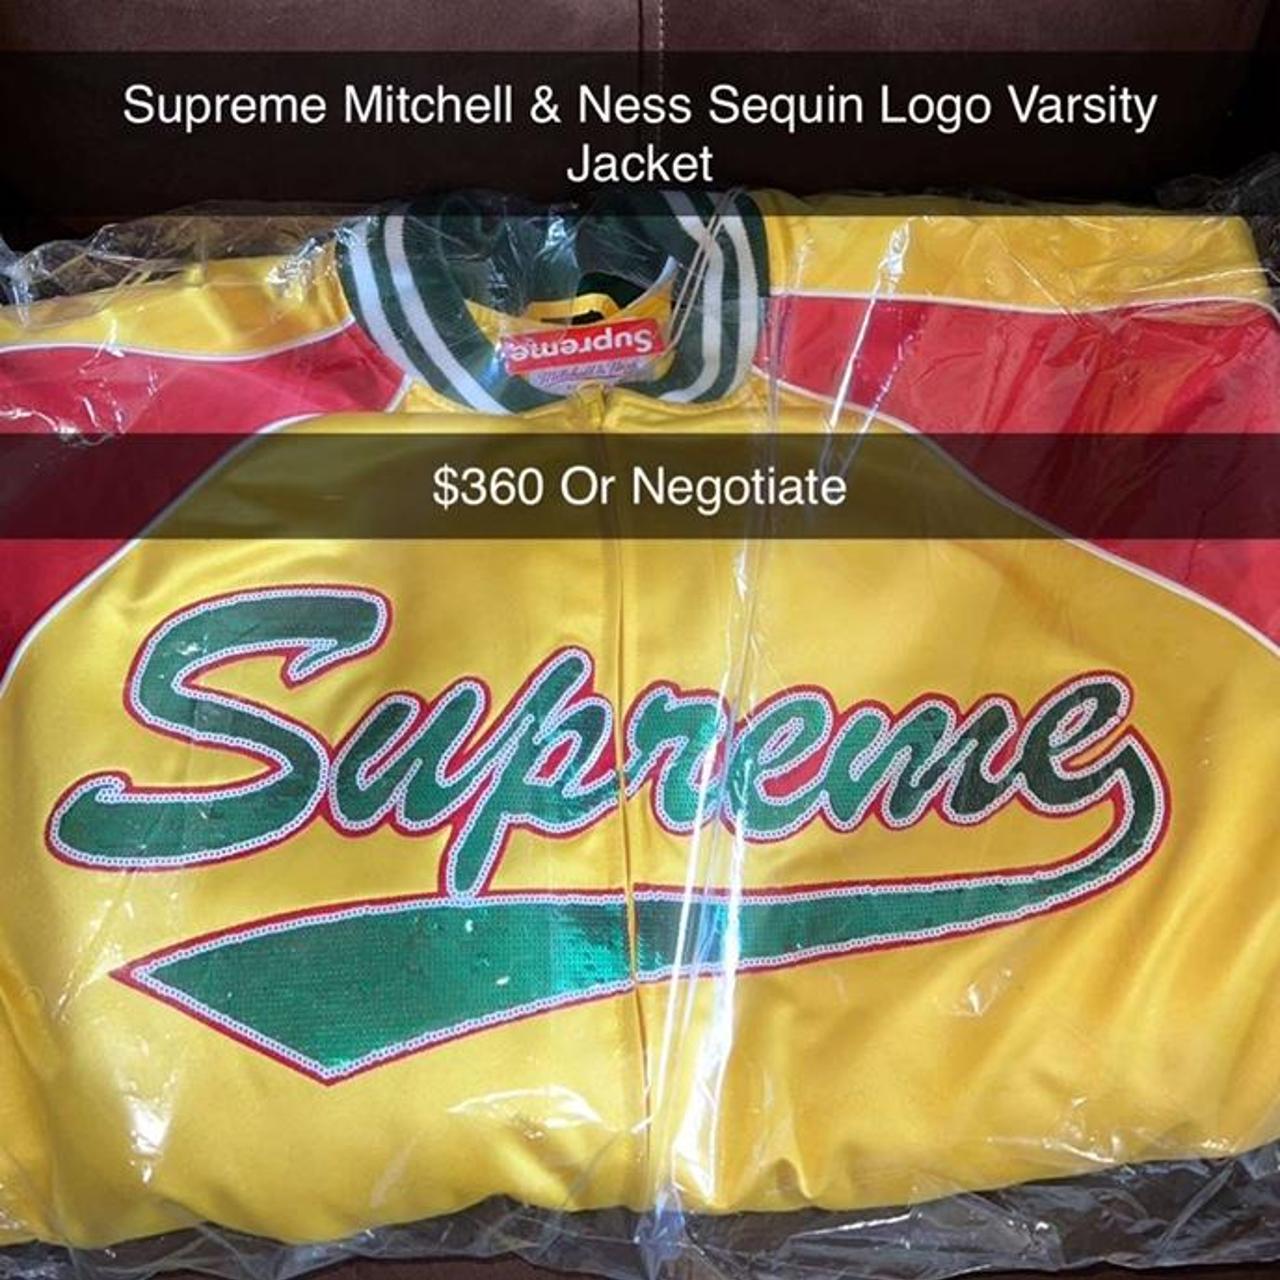 Supreme Mitchell & Ness Sequin Varsity Jacket